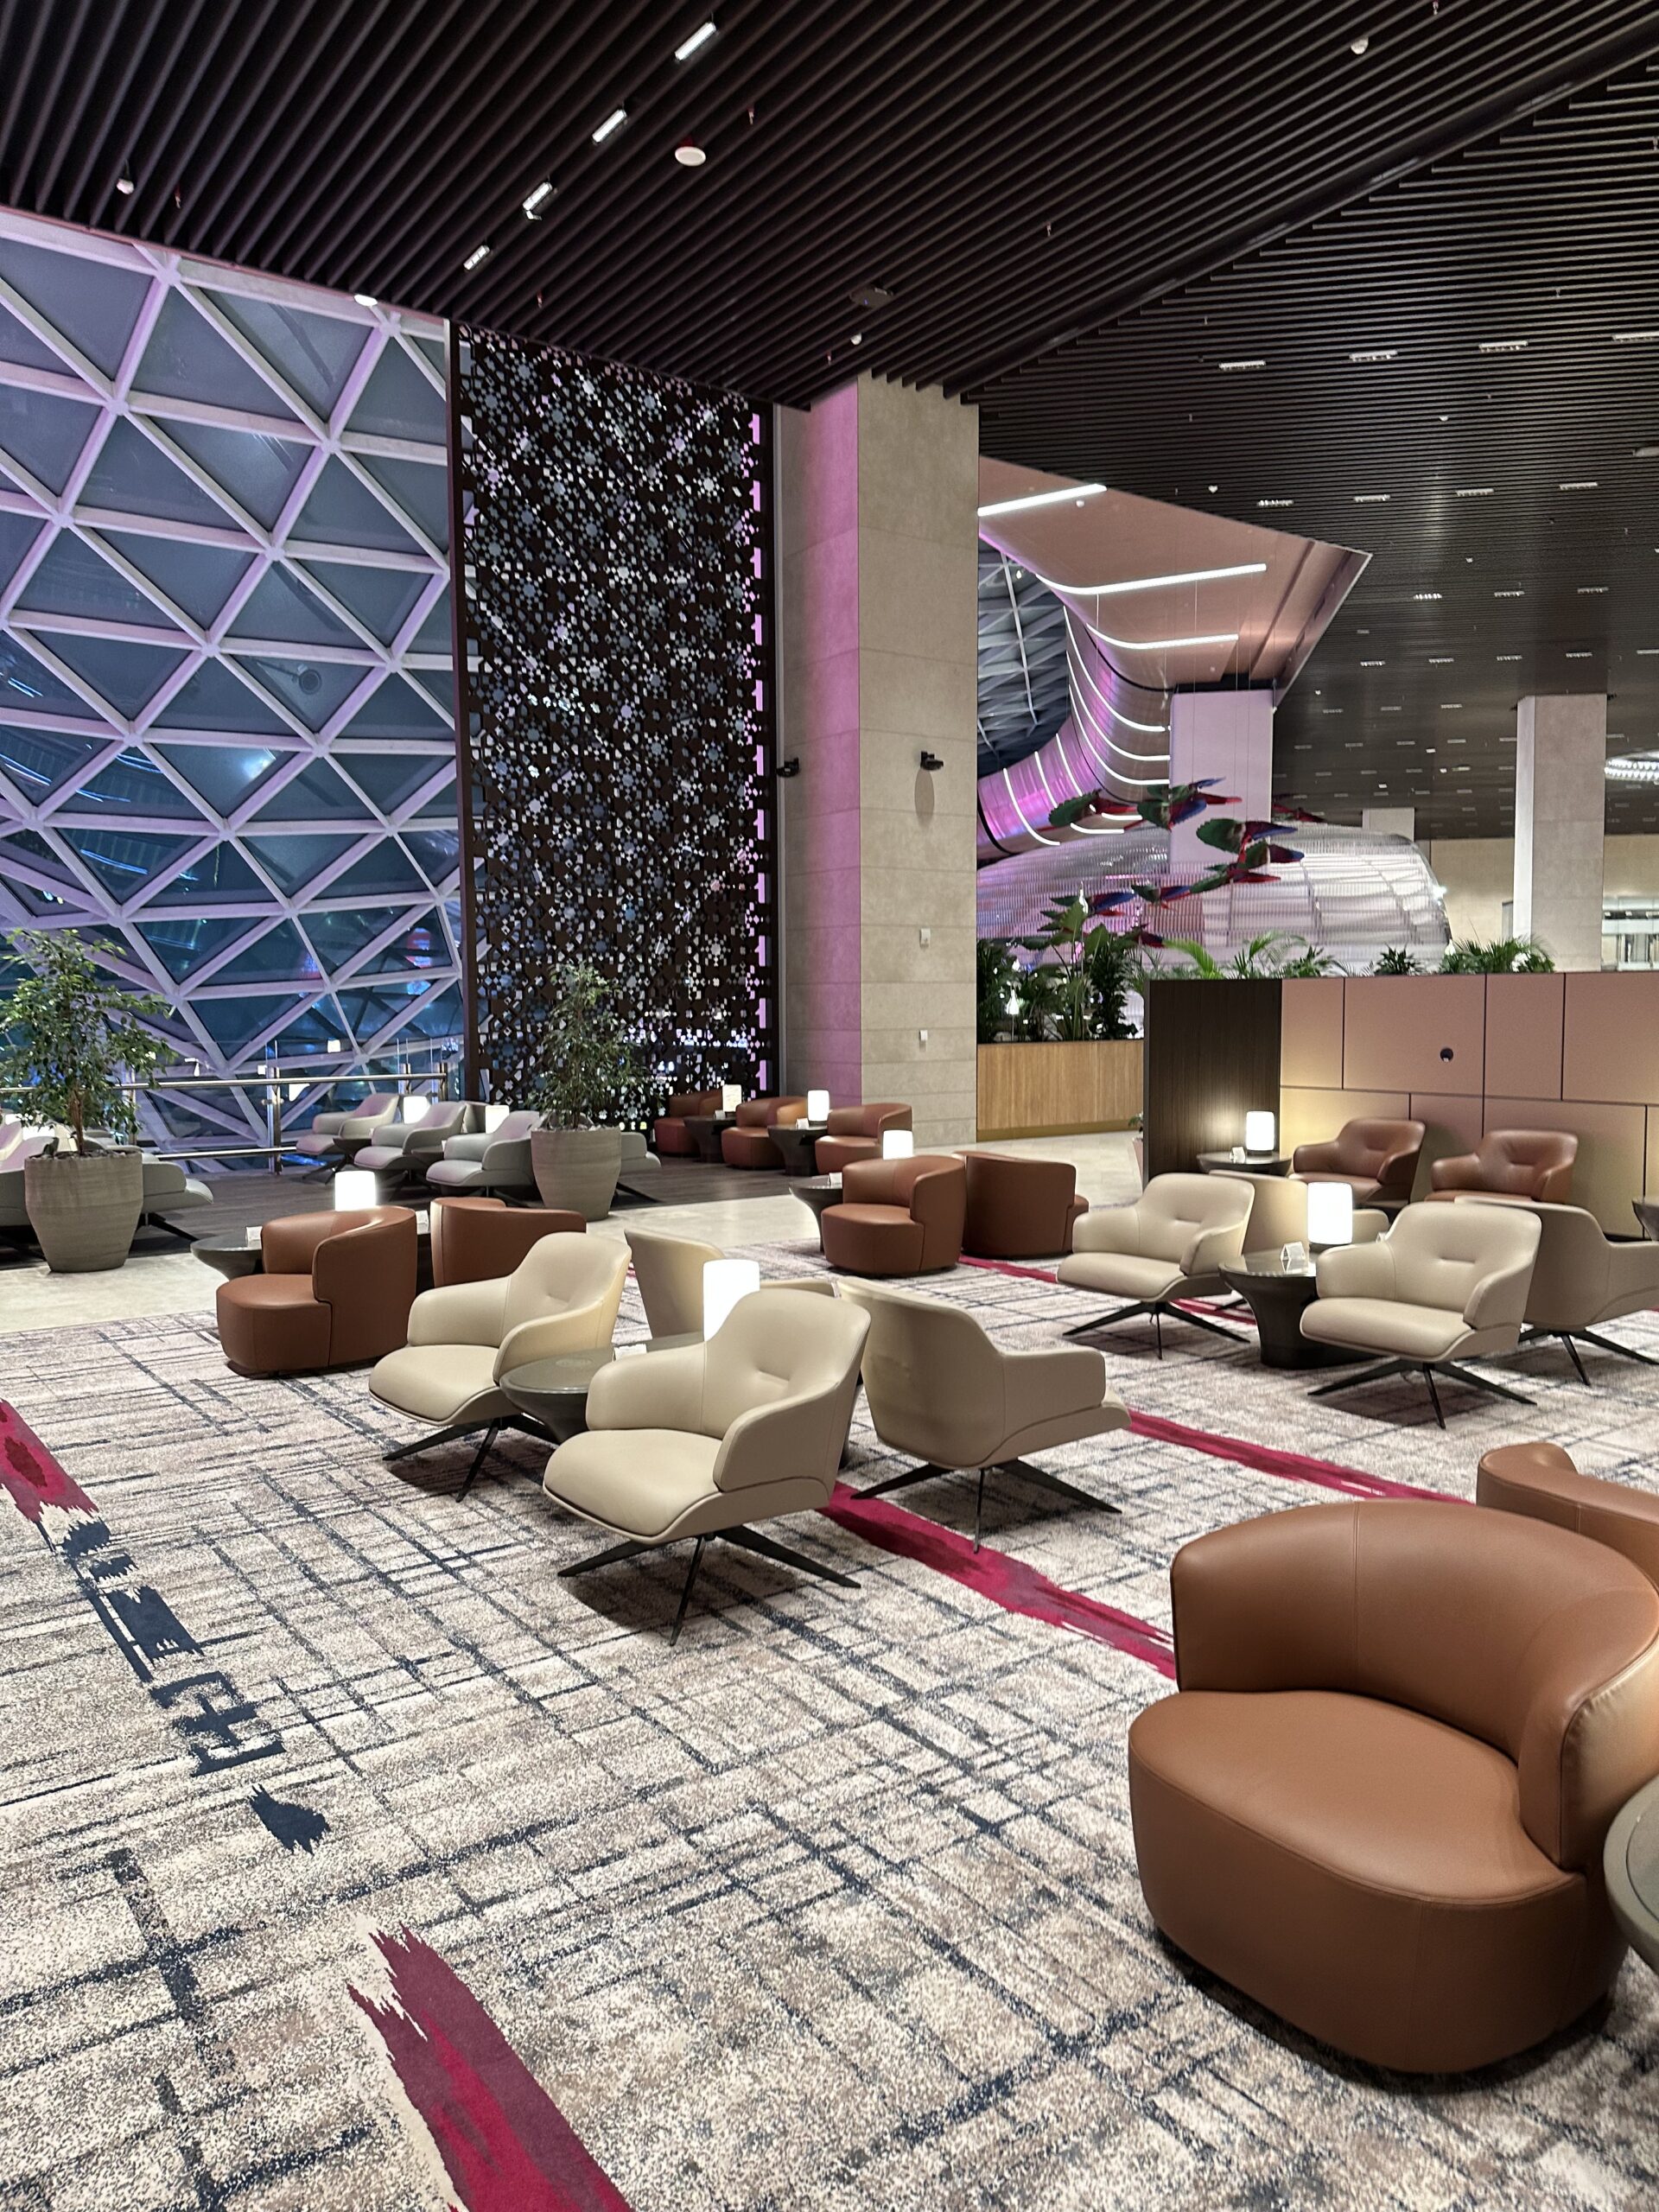 Visiting Qatar Airways' exclusive Doha Louis Vuitton Lounge